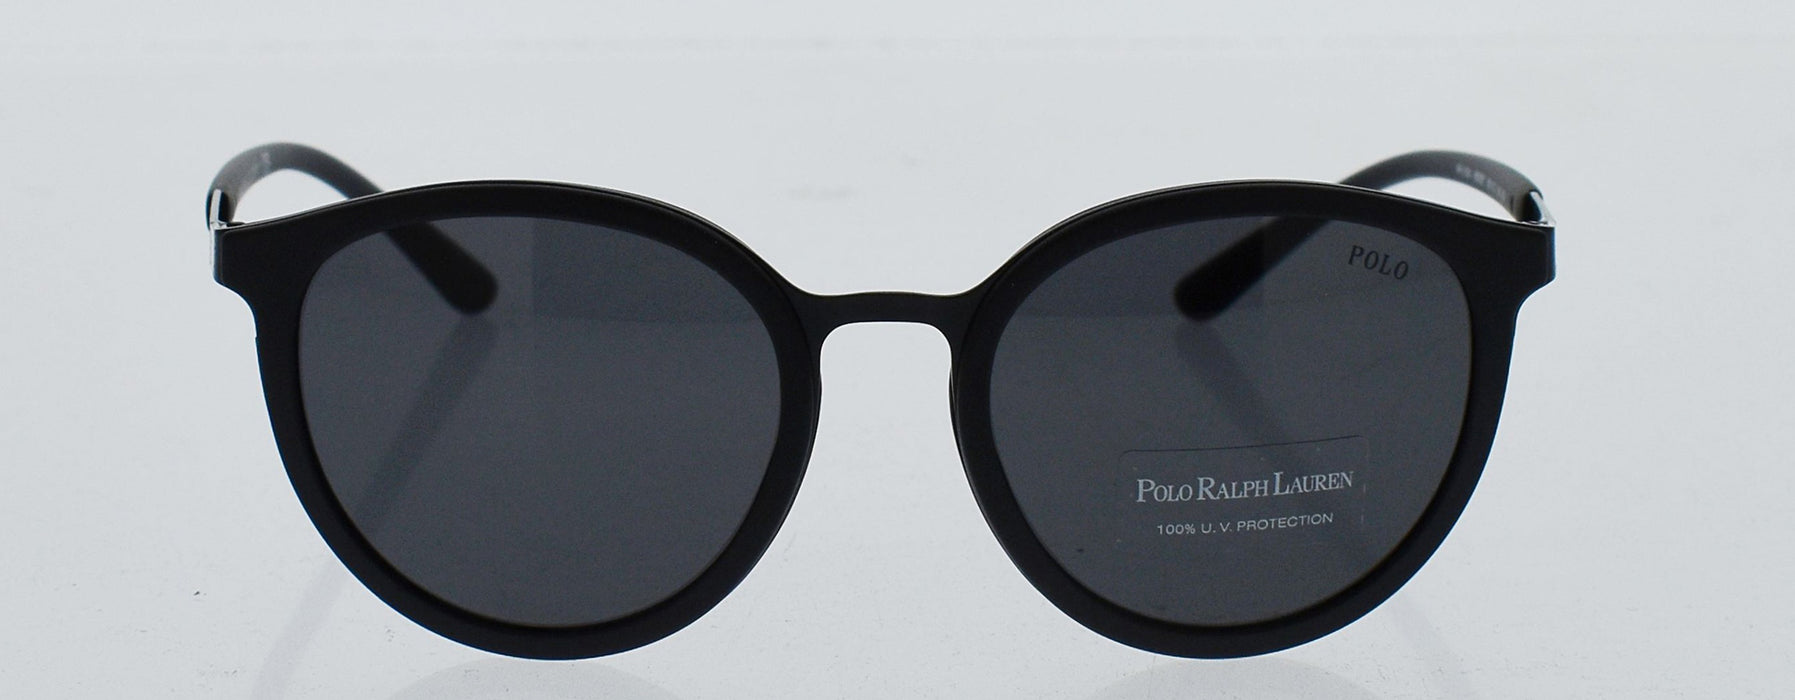 Polo Ralph Lauren PH 3104 903887 - Black-Dark Grey by Ralph Lauren for Men - 50-18-140 mm Sunglasses